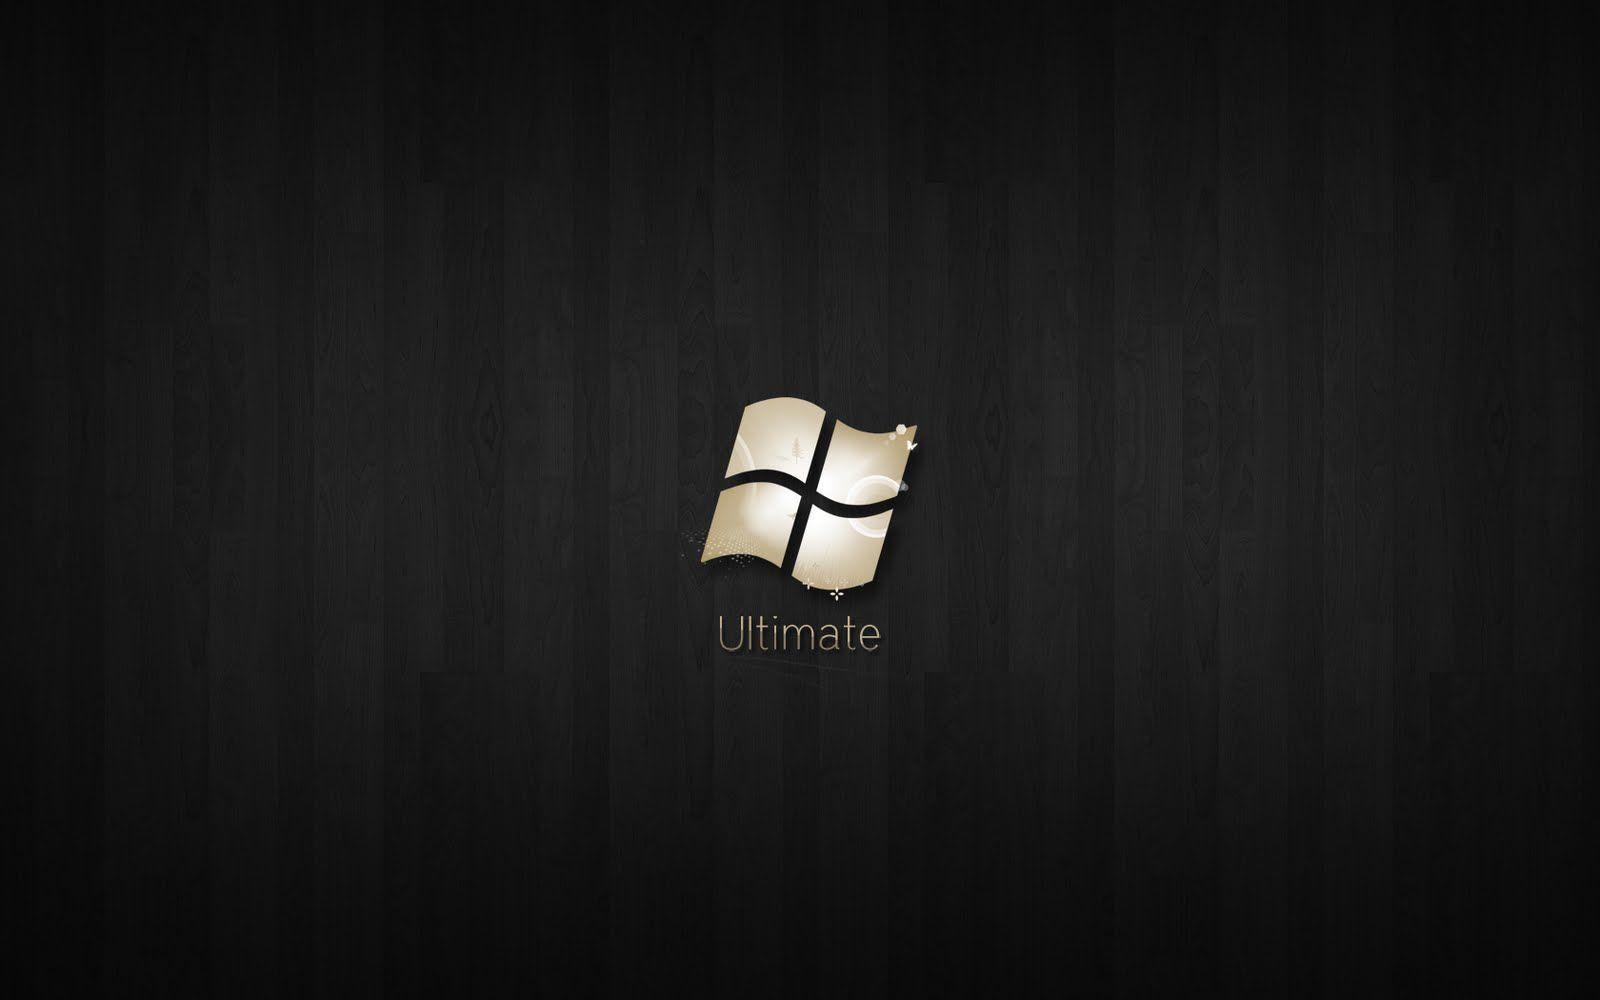 Windows 7 Ultimate HD Wallpapers